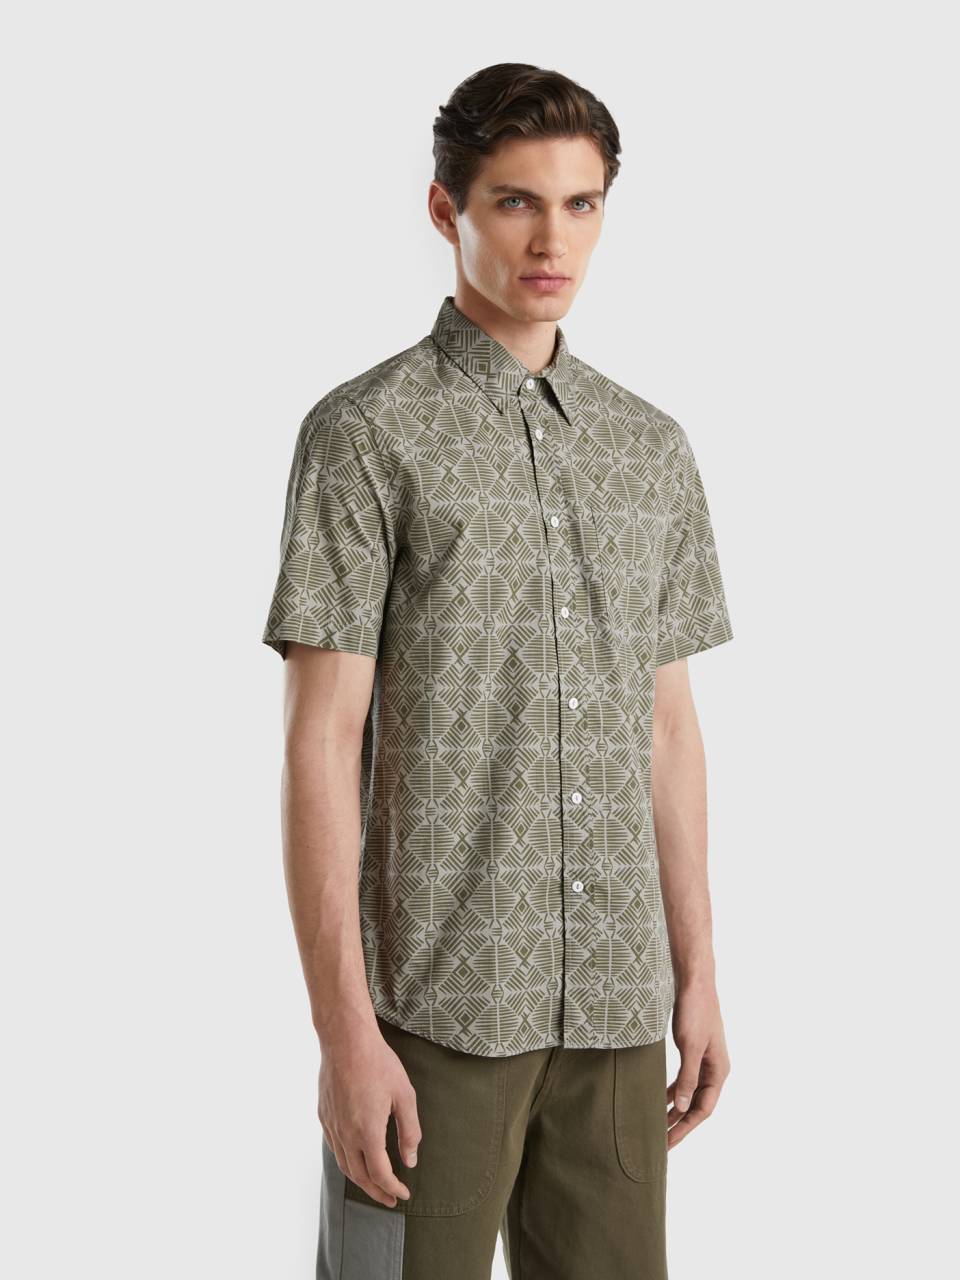 Benetton short sleeve patterned shirt. 1